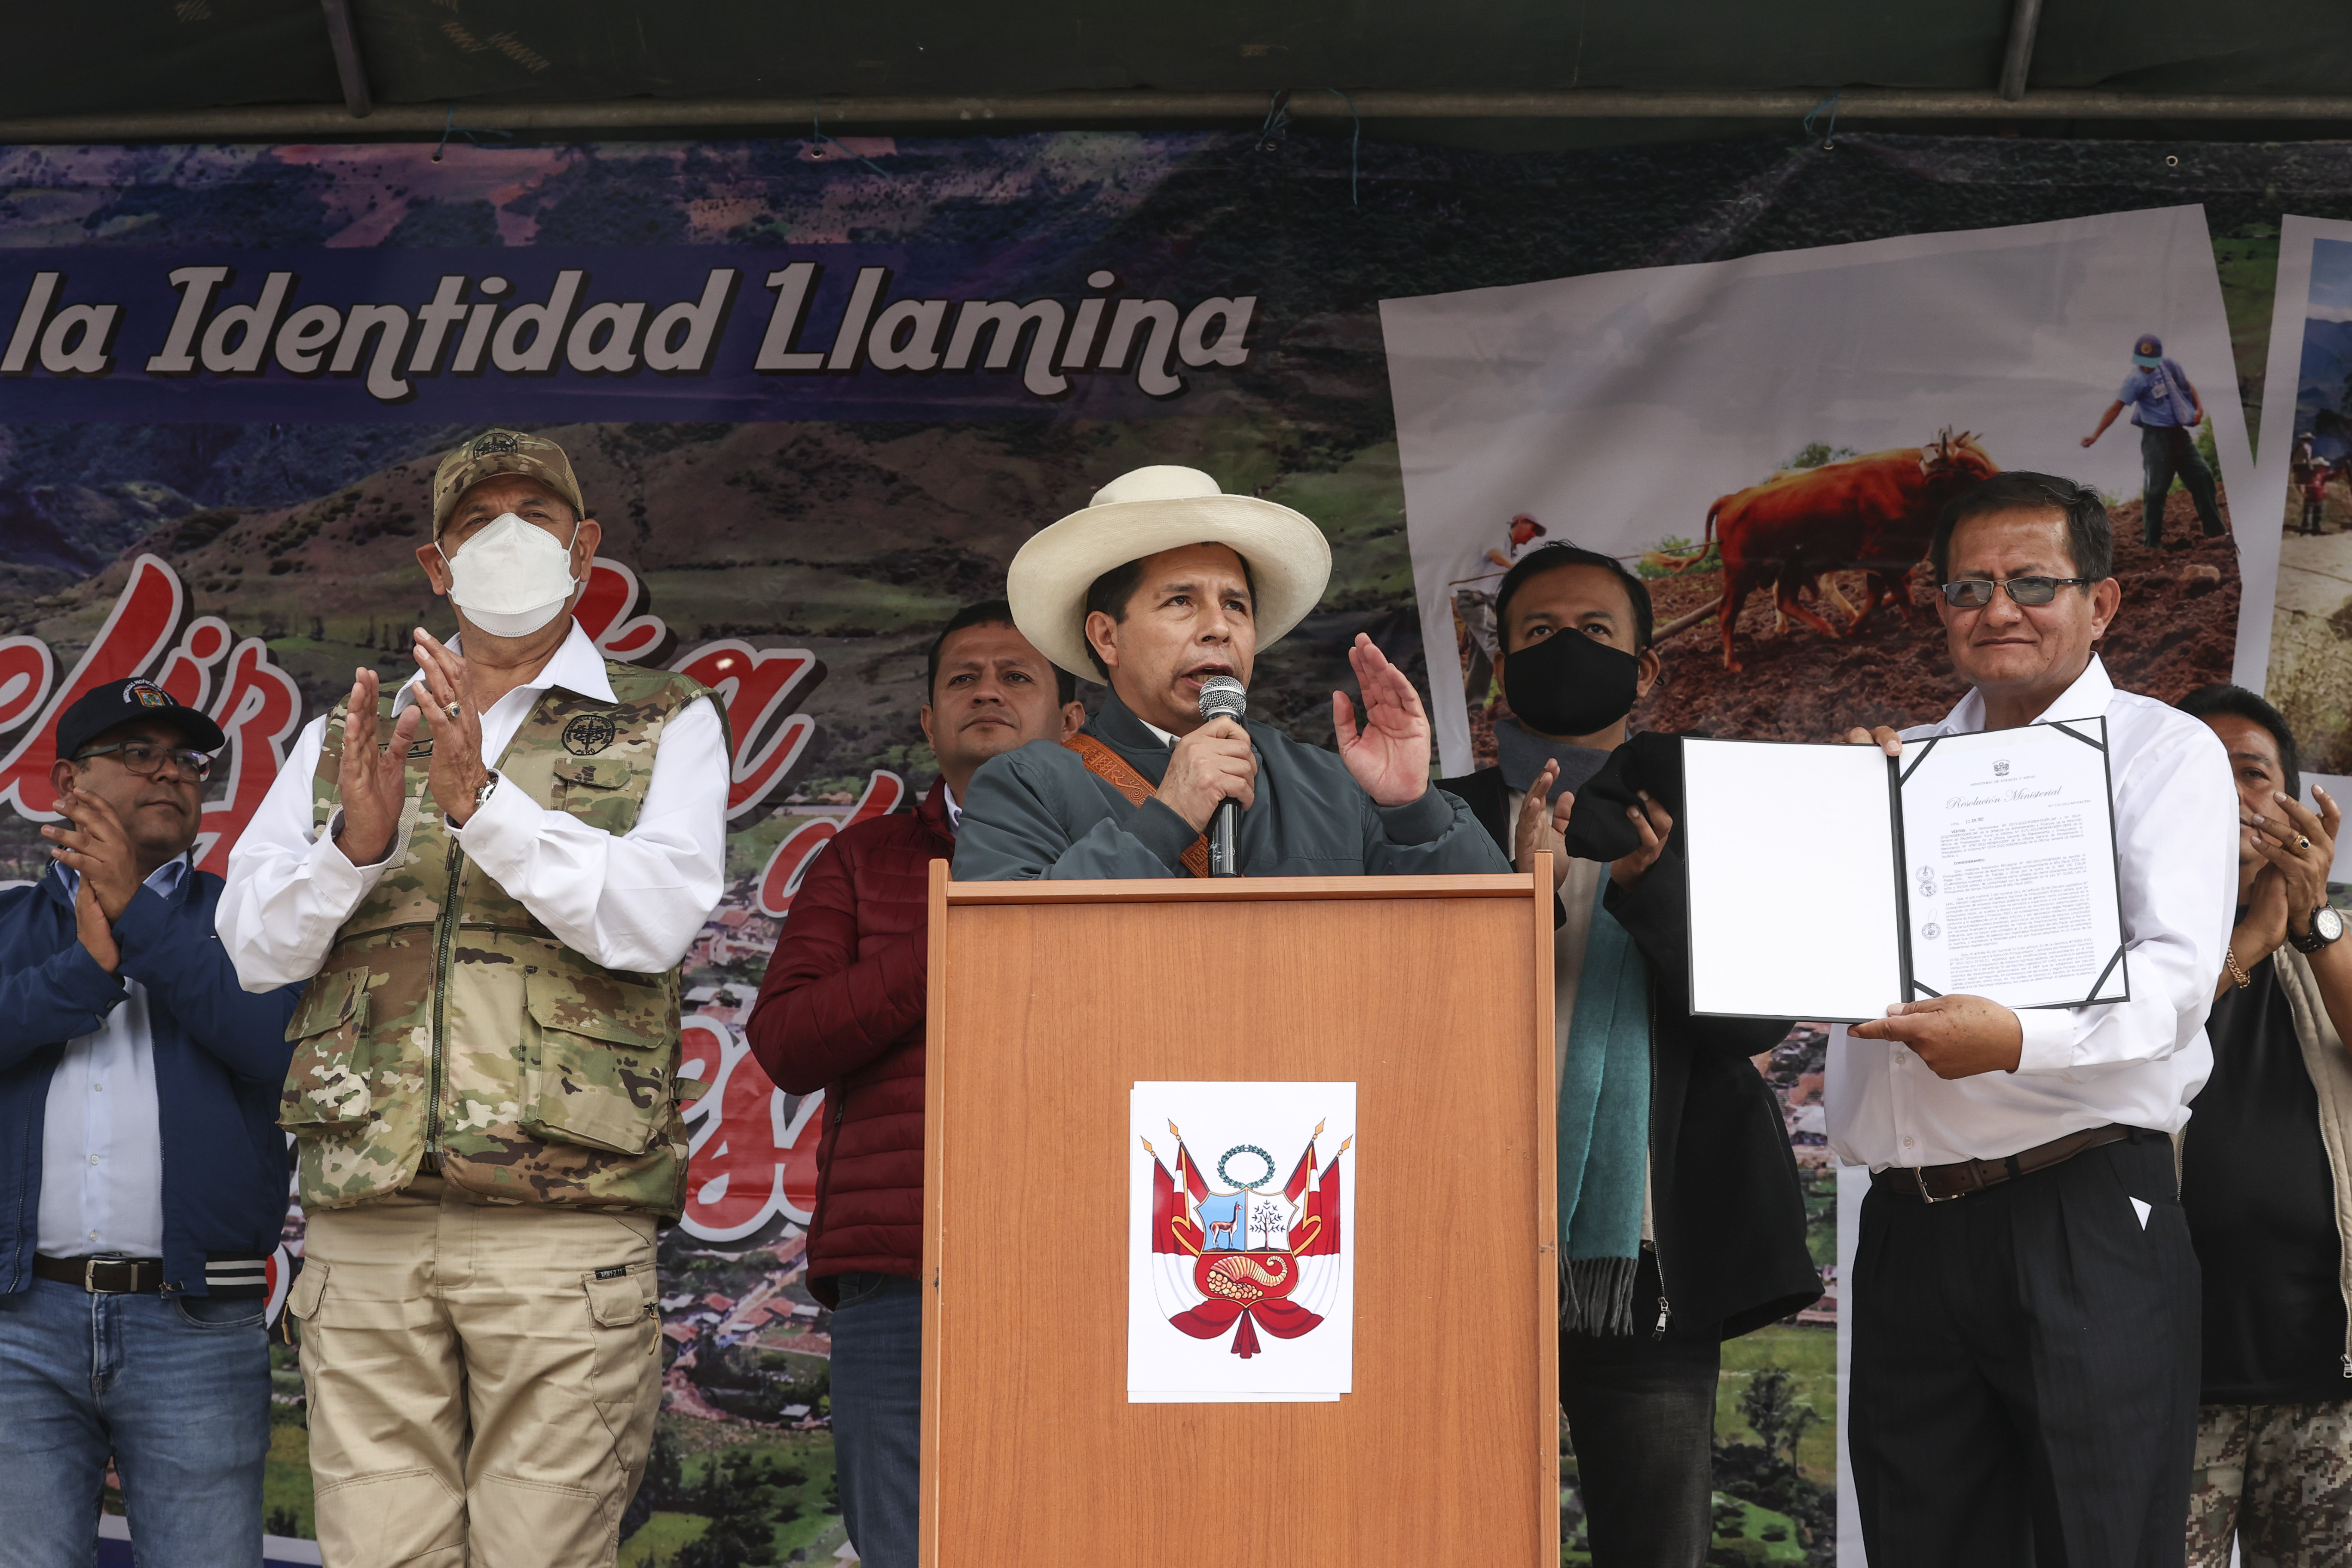 Presidente Pedro Castillo entregó s/17.5 millones para electrificación rural de 23 comunidades en distrito de Llama, en Cajamarca